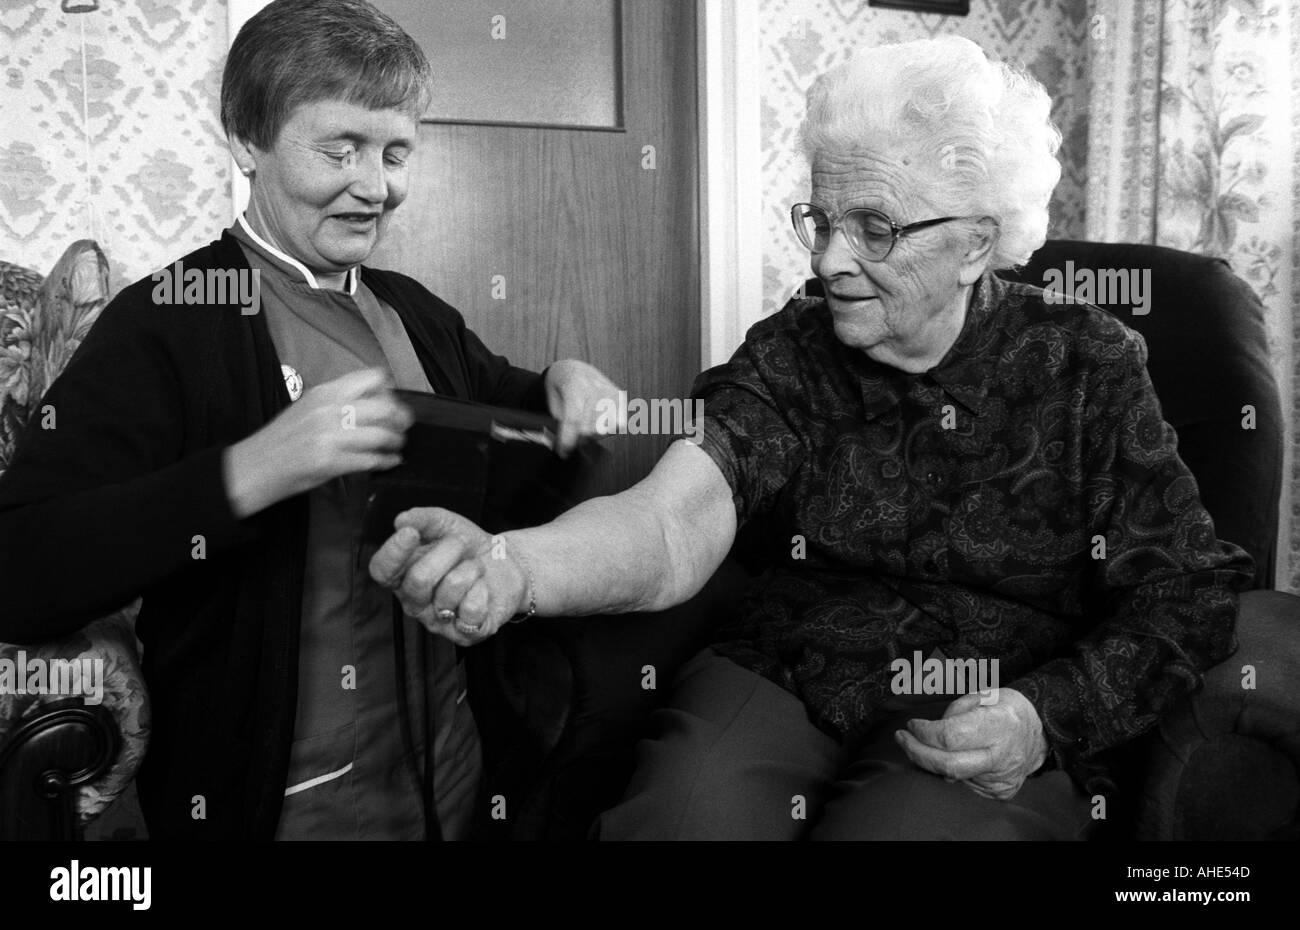 A district nurse measures a patient's blood pressure during a home visit, London, UK. Stock Photo